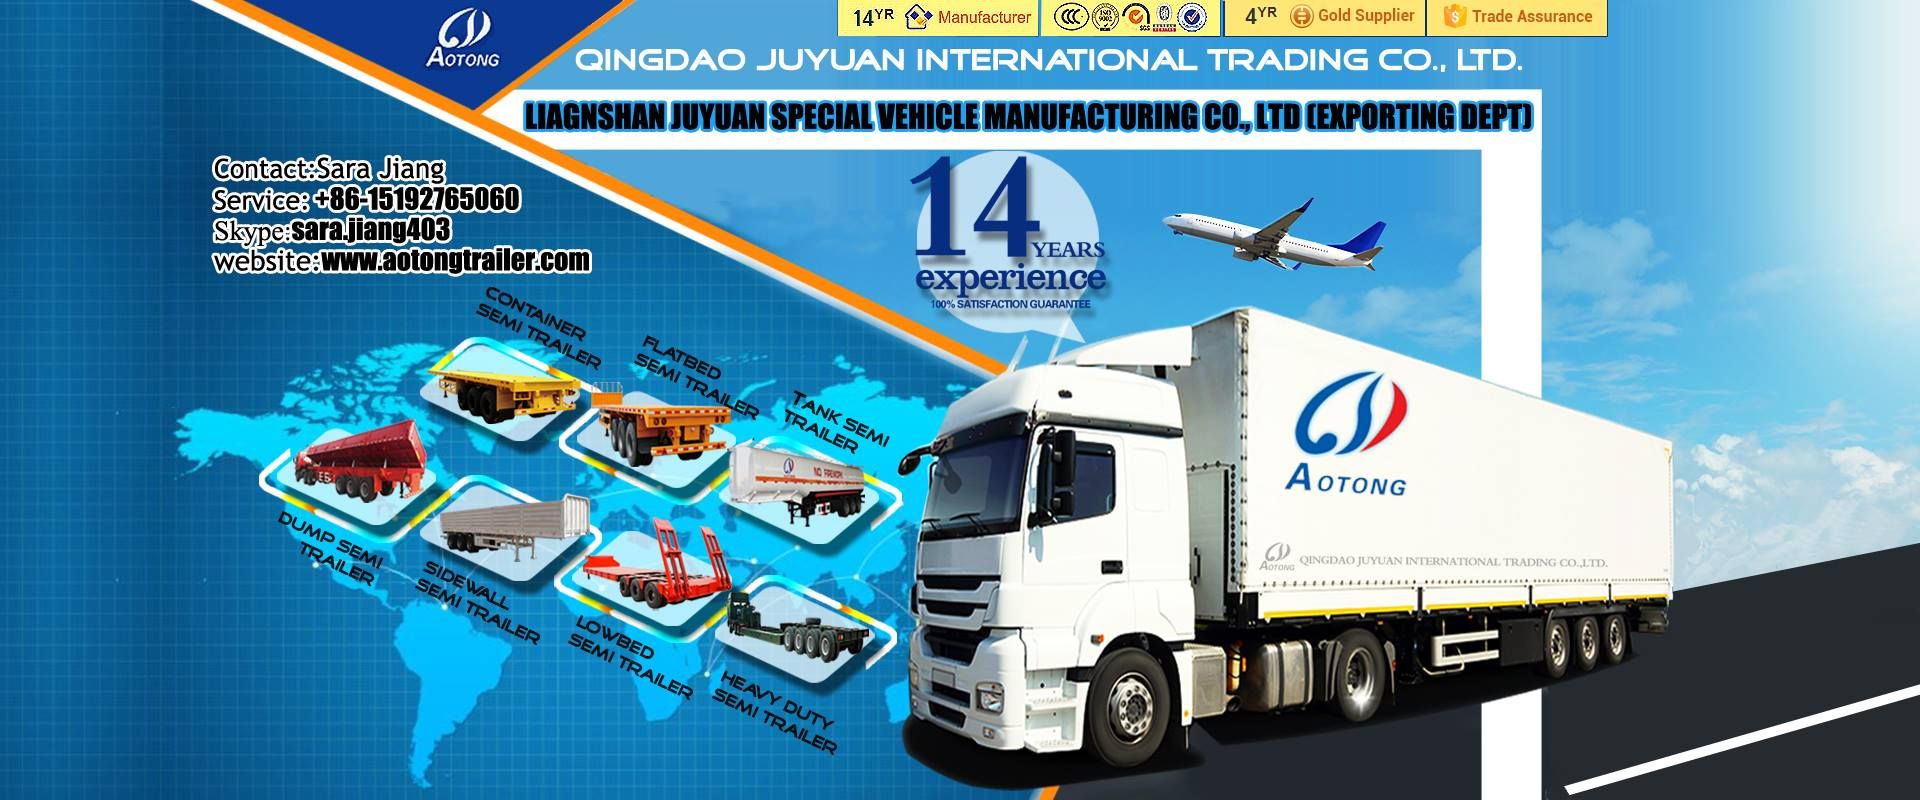 Qingdao Juyuan International Trading Co.,Ltd. Main Image